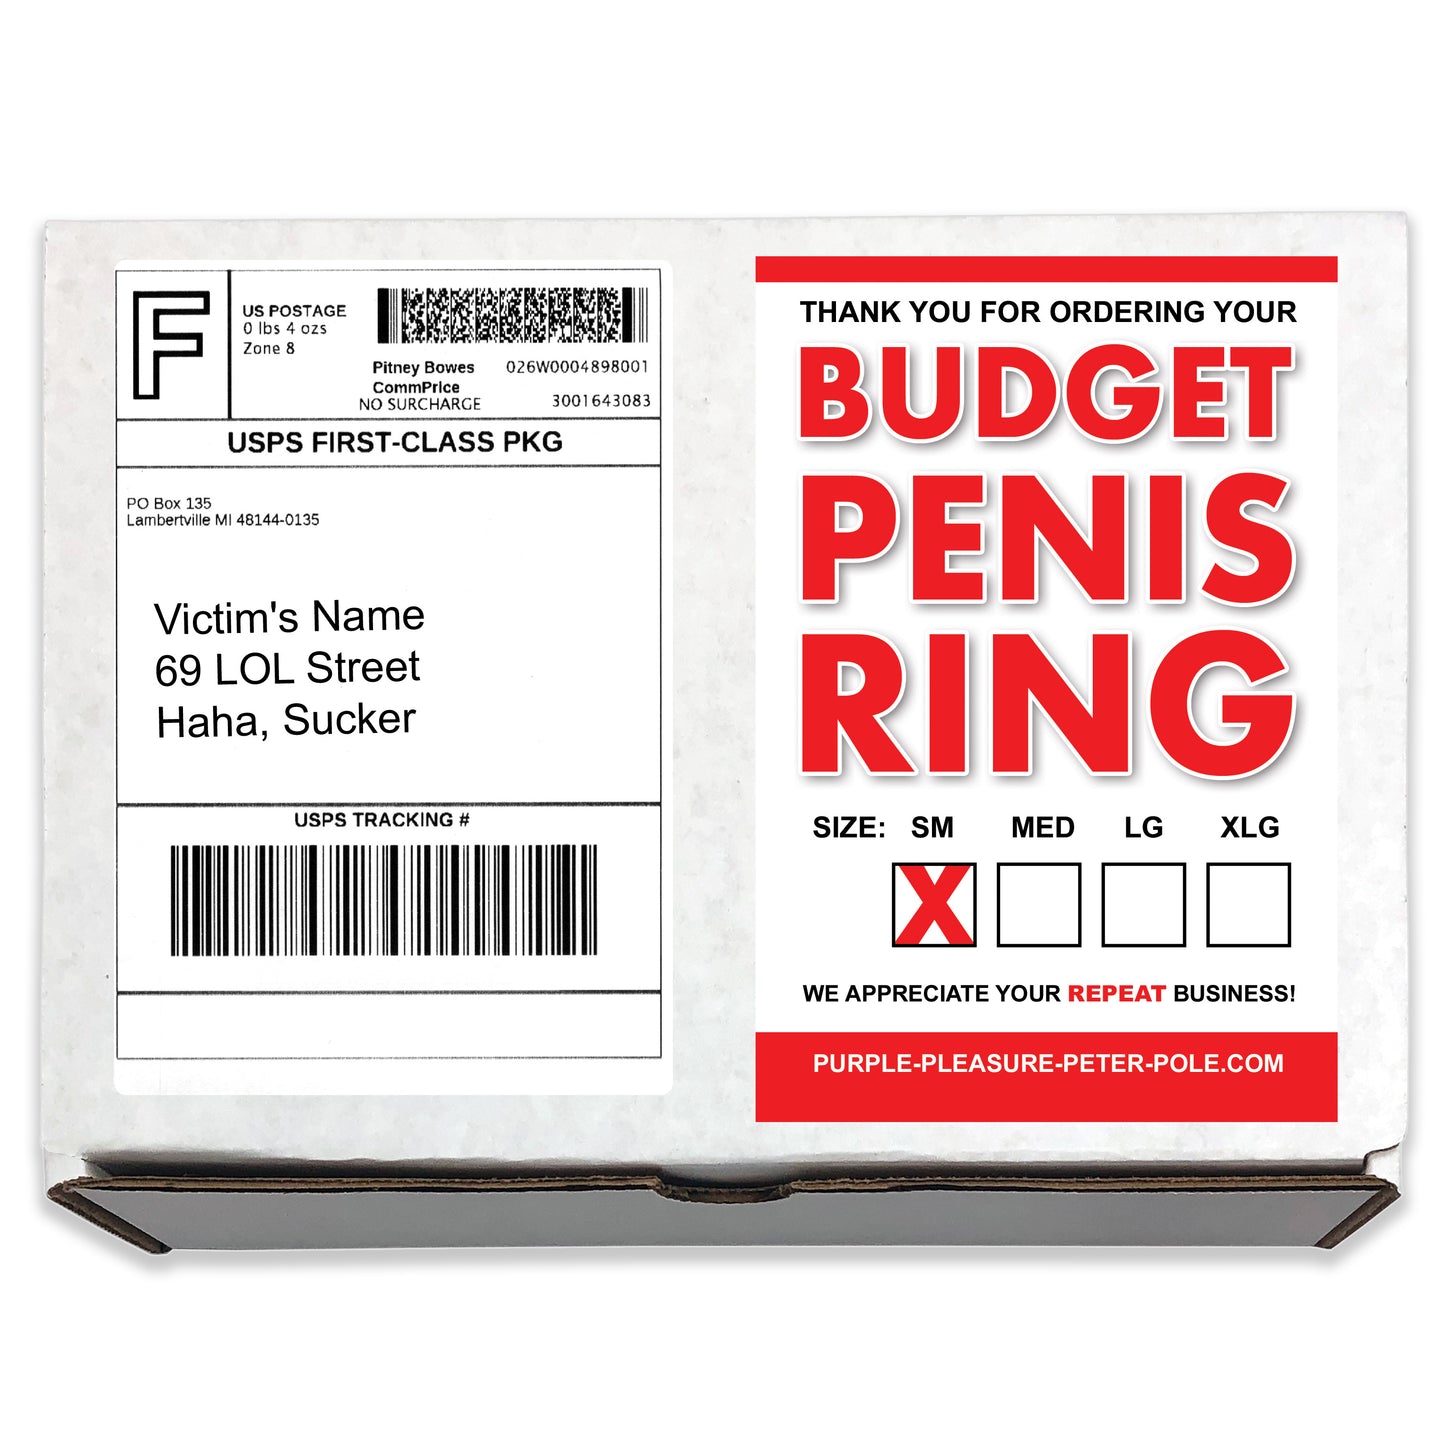 Budget Penis Ring embarrassing prank box